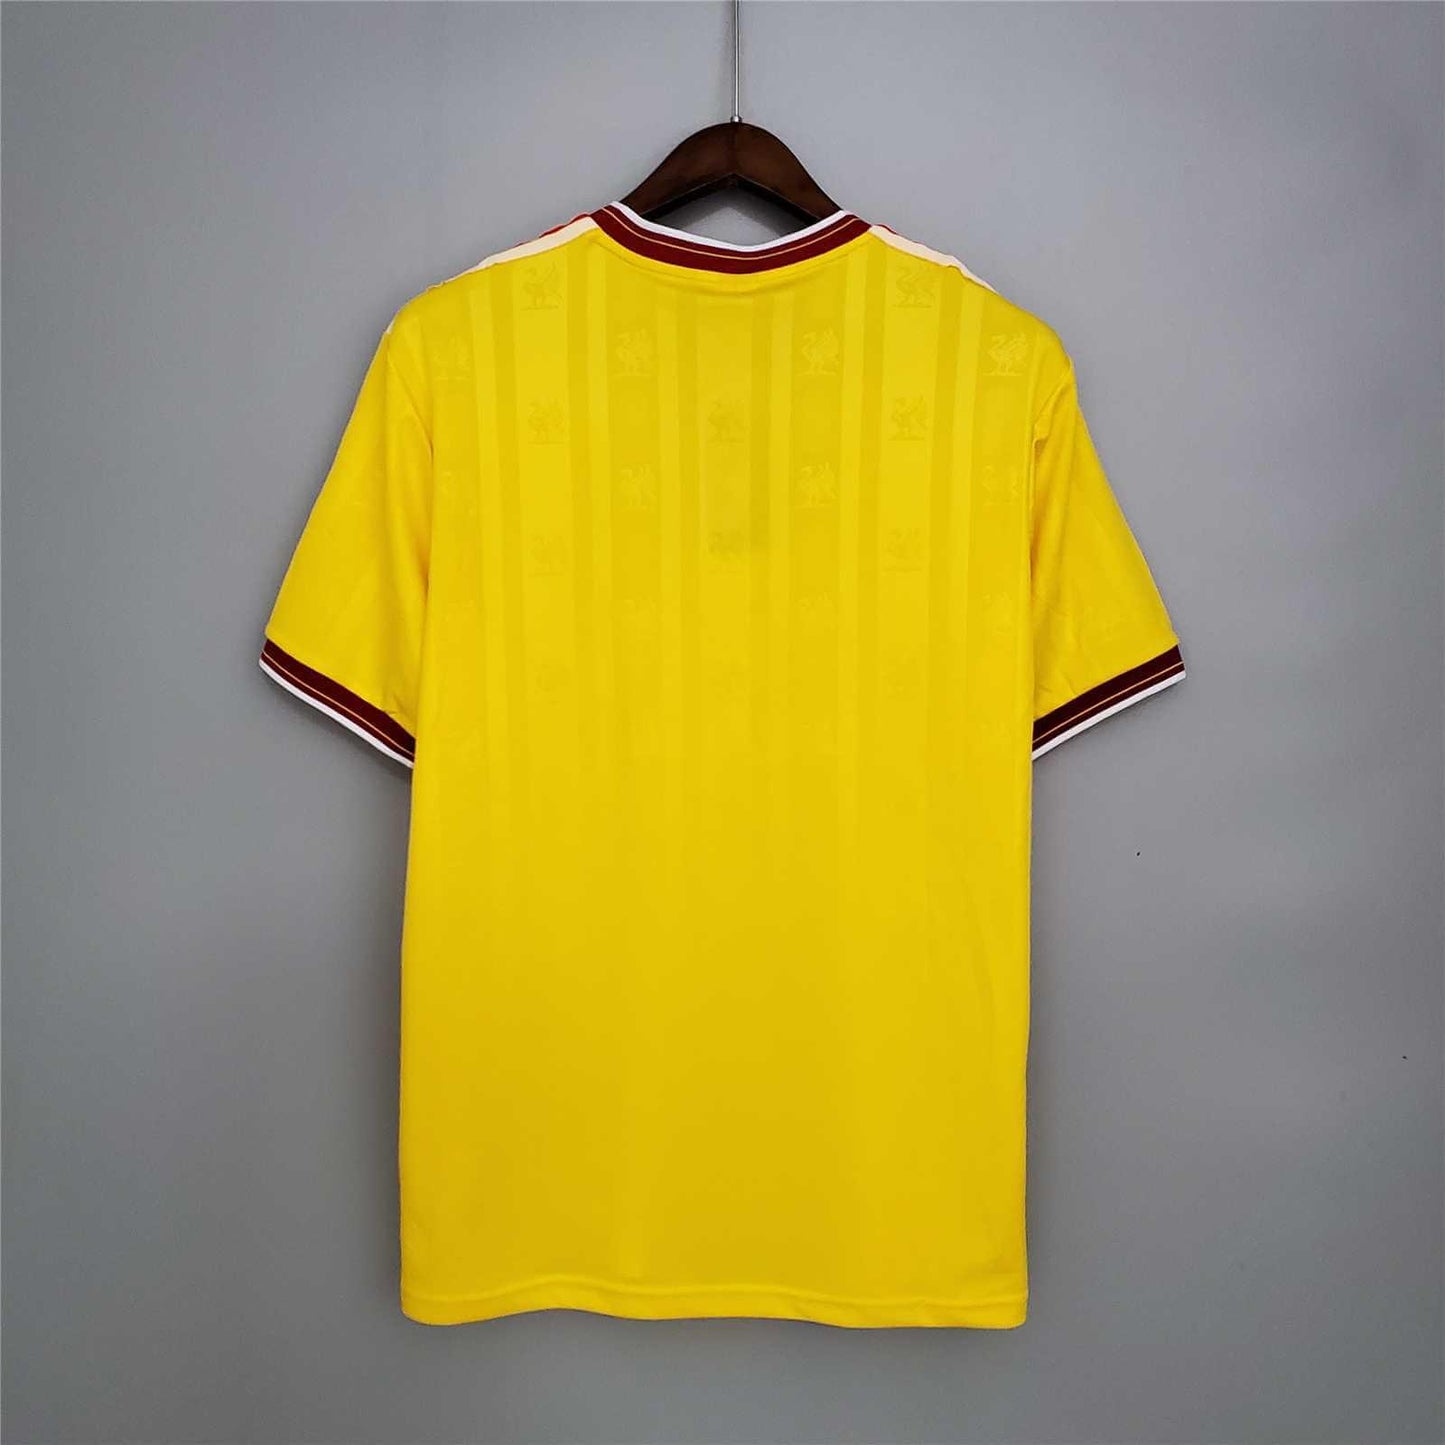 Liverpool Third Shirt 1985-1986 - Football Kit Up